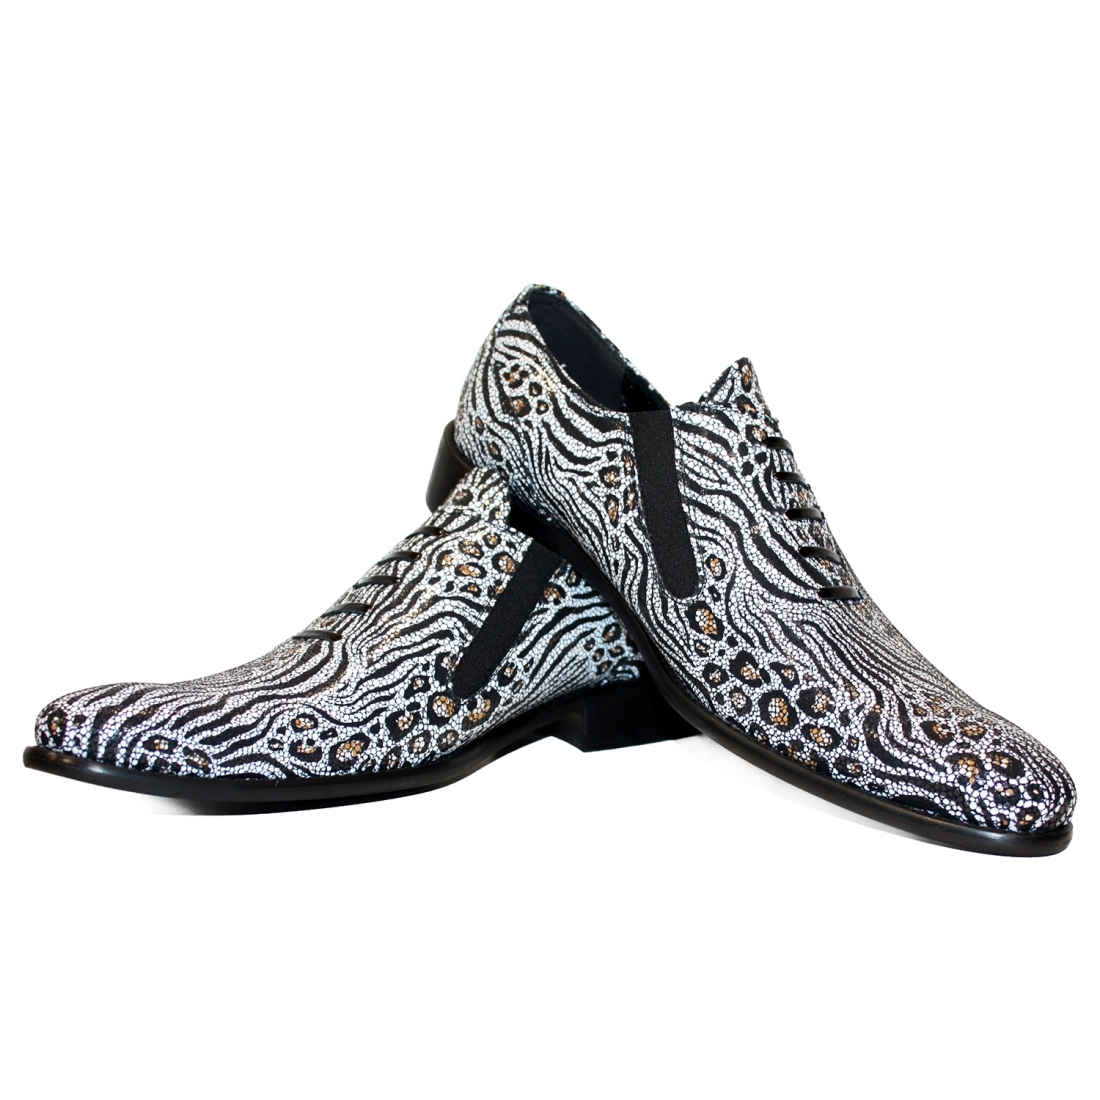 Modello Safarro - Slipper - Handmade Colorful Italian Leather Shoes